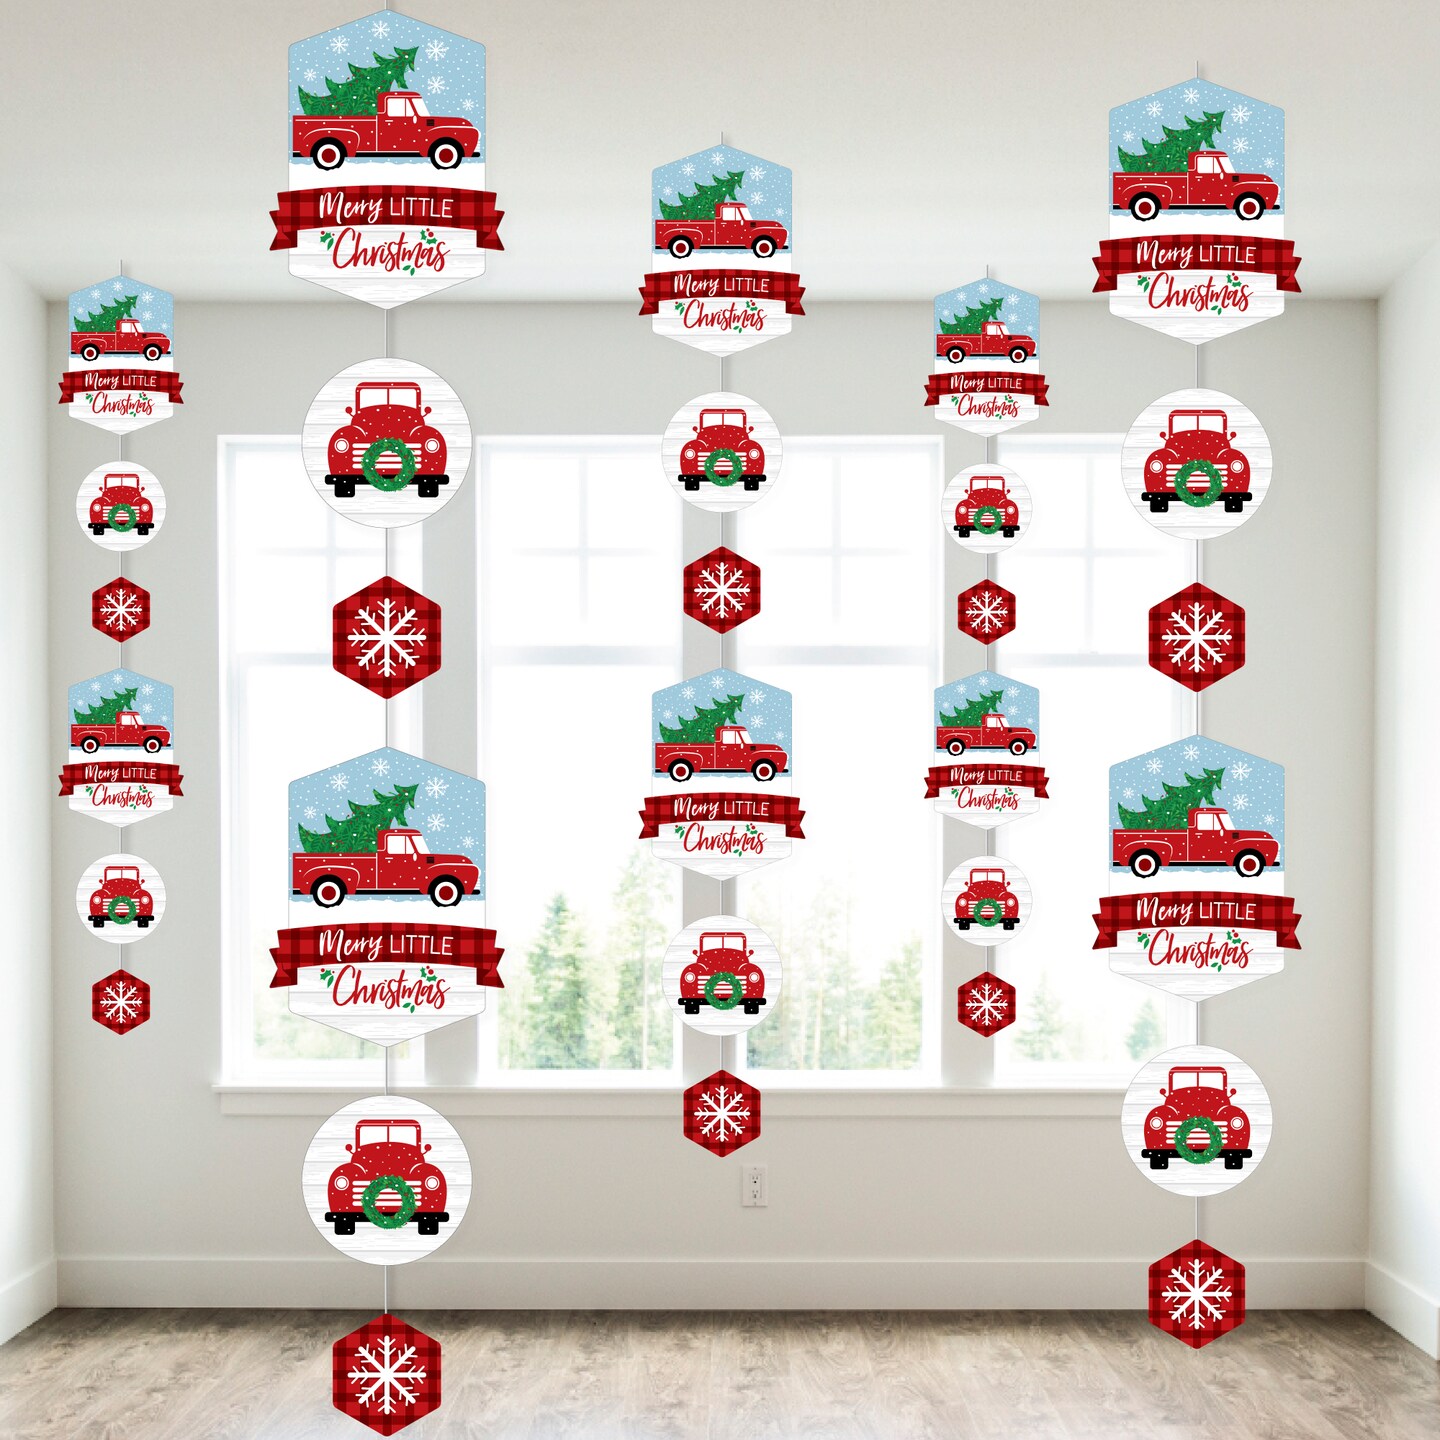 O CHRISTMAS TREE - Stickers - Snap Click Supply Co.